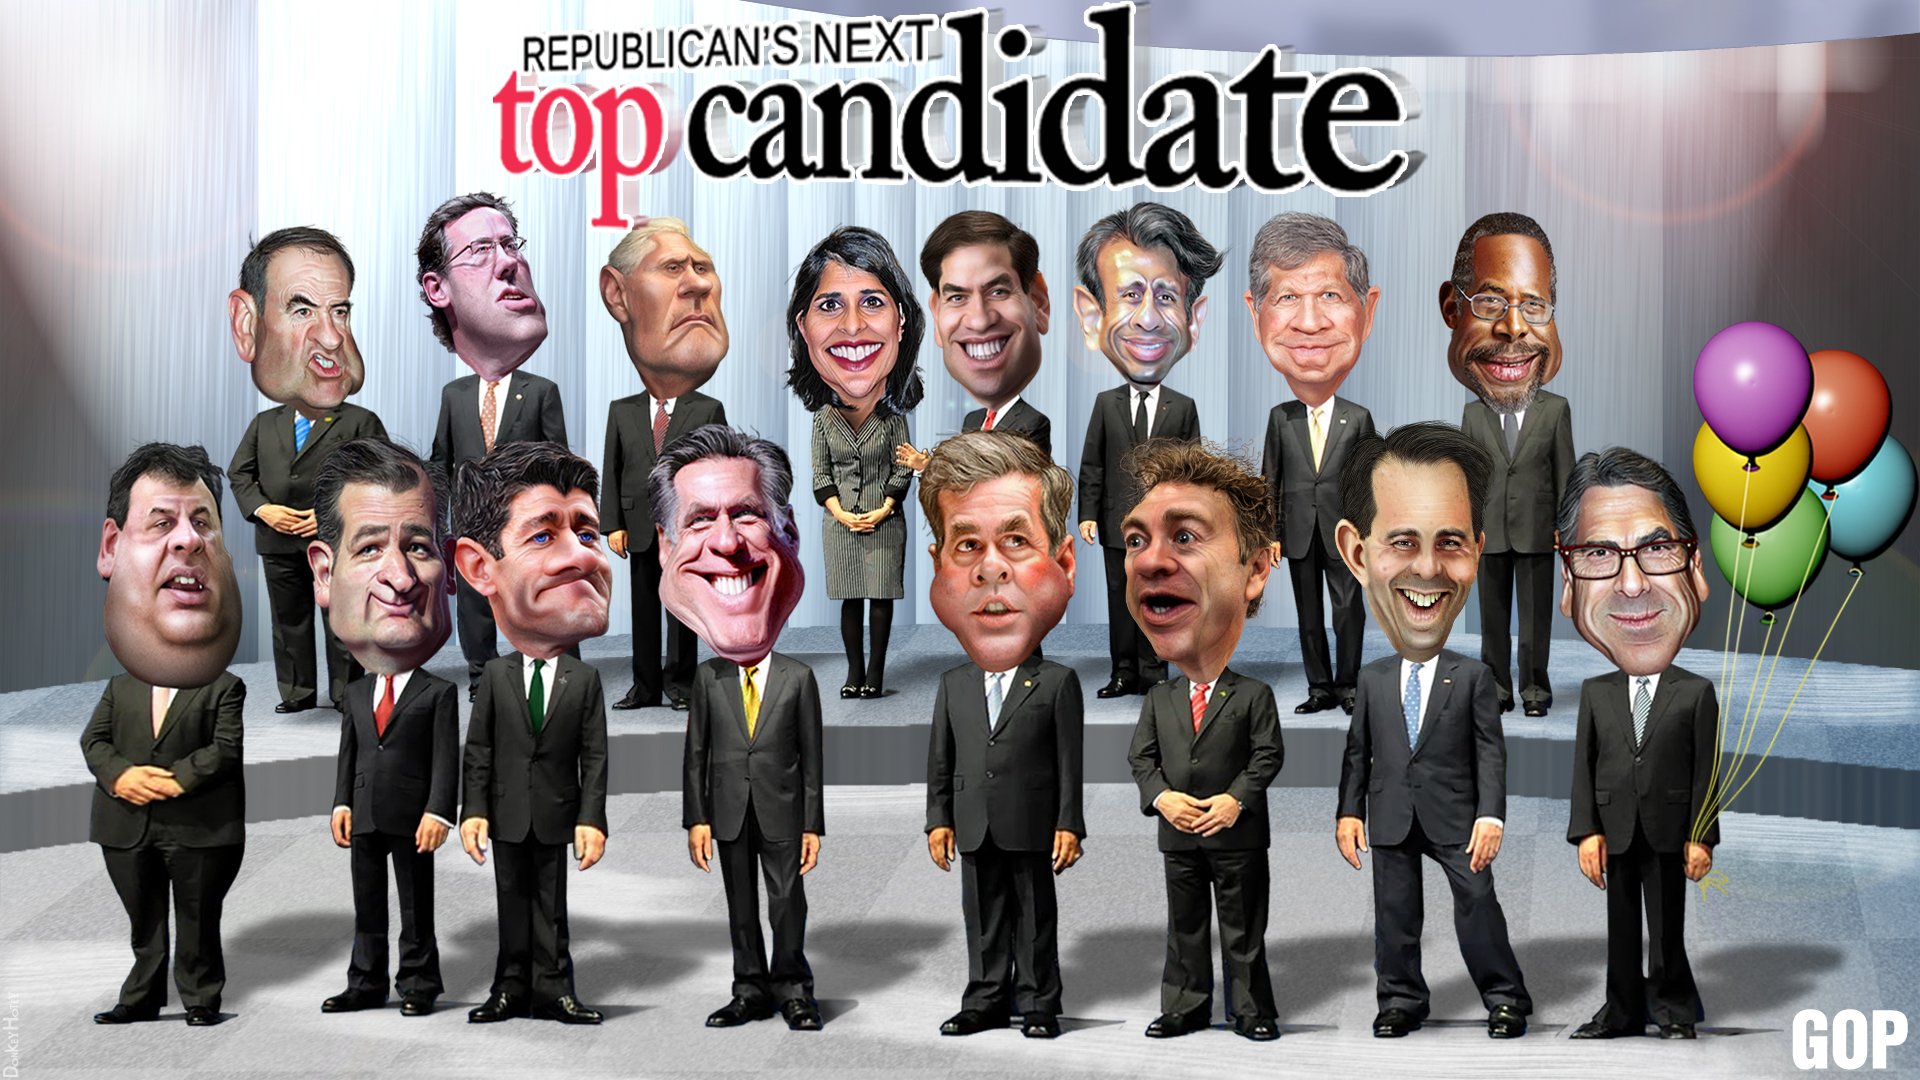 Republicans_Next_Top_Candidate_2016_1920x1080.jpg